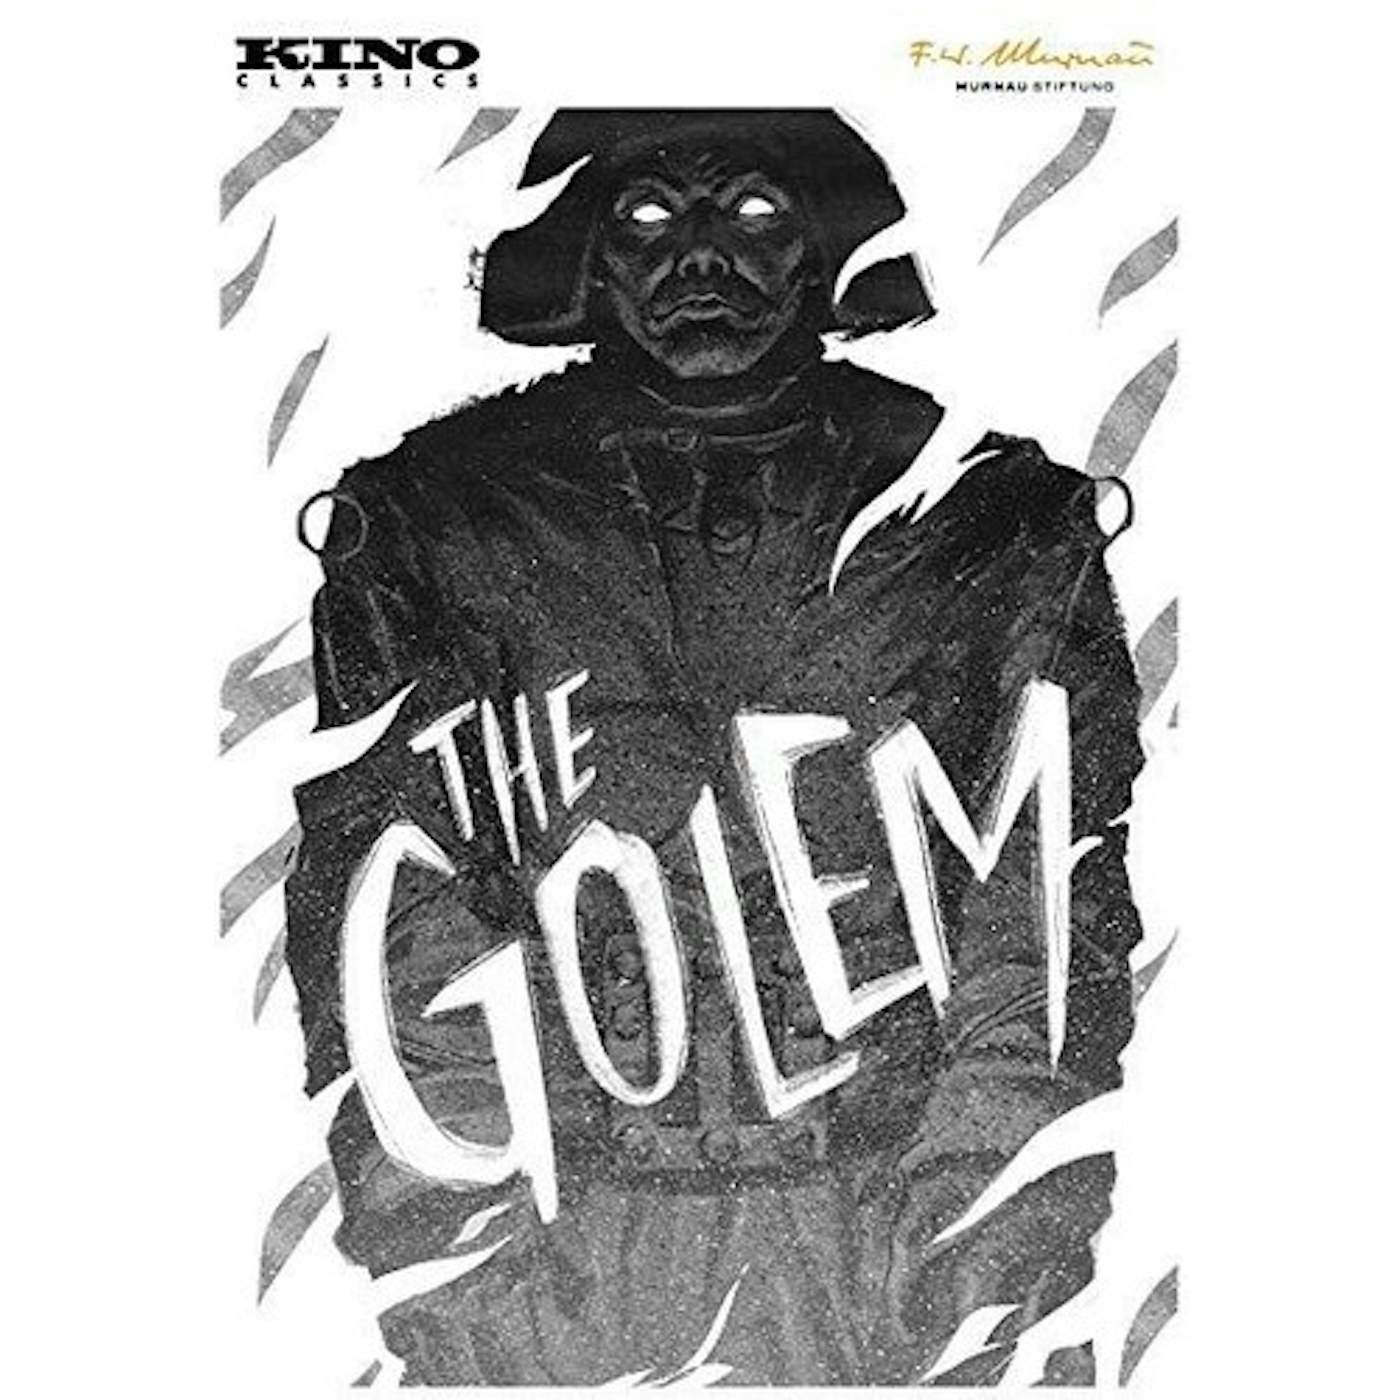 GOLEM (1920) DVD